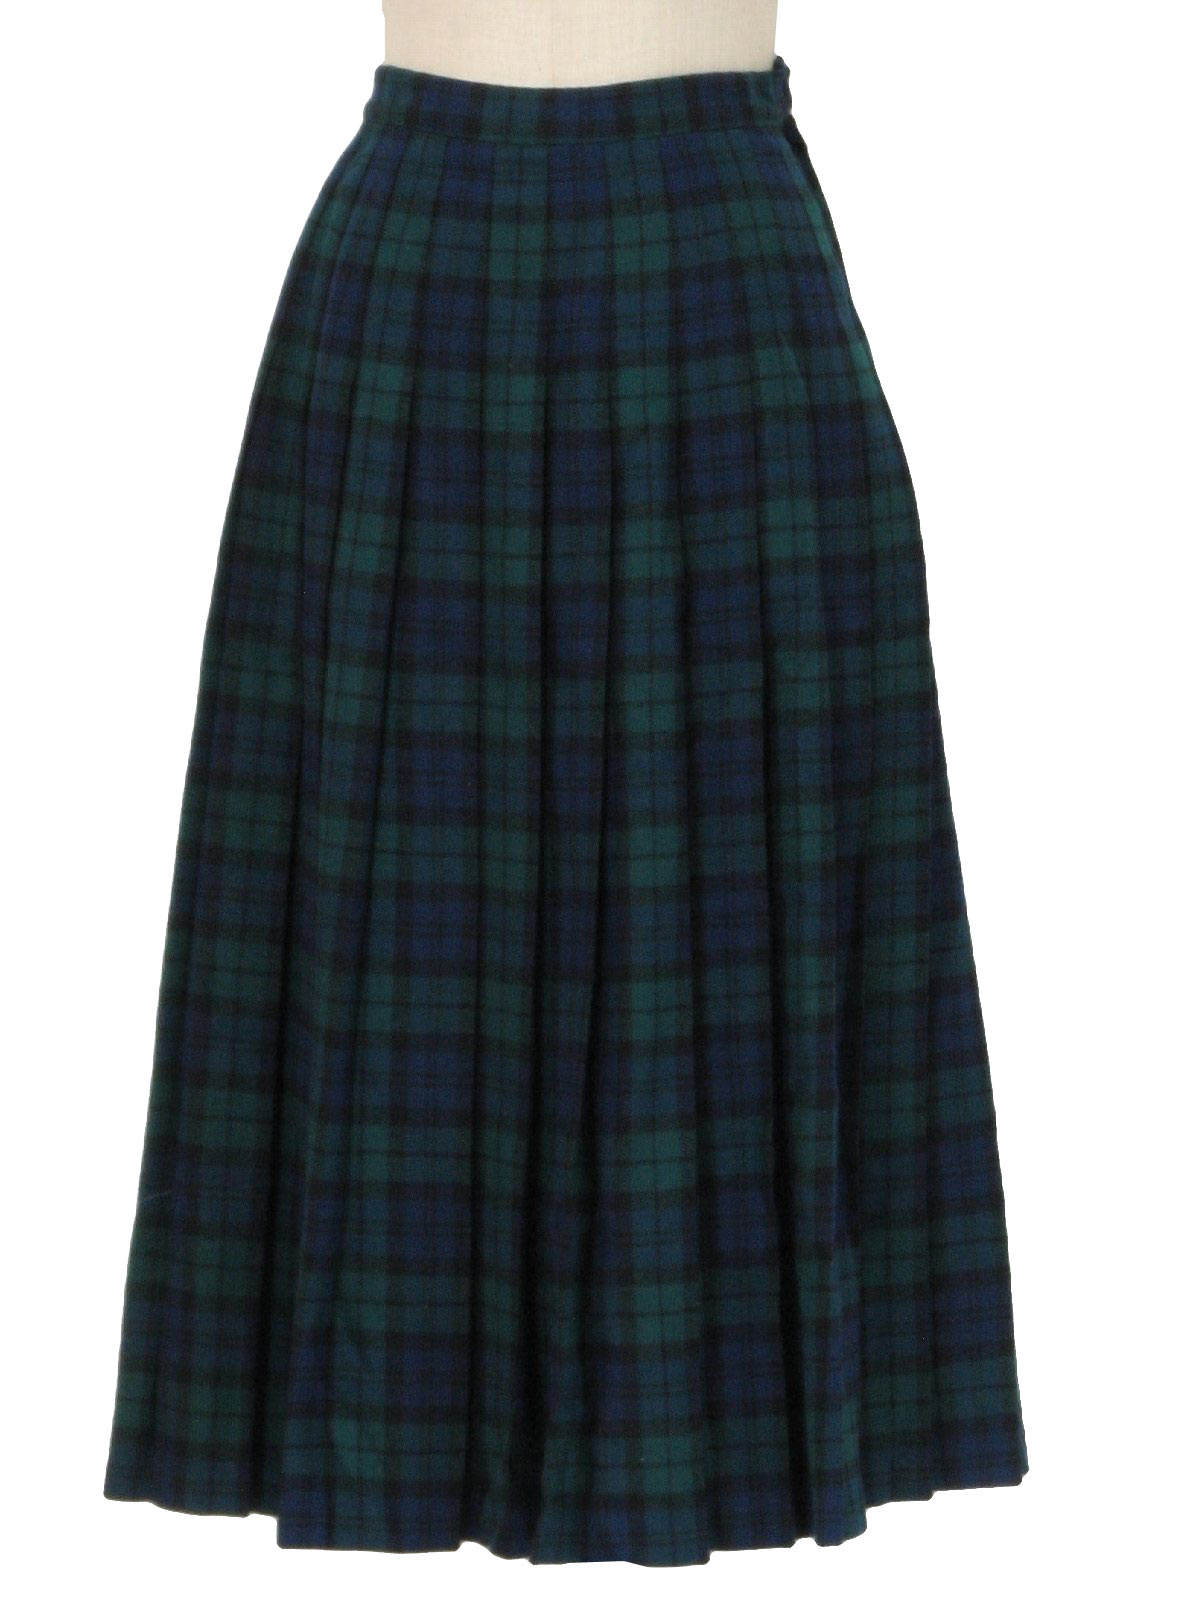 Seventies Pendleton Wool Skirt: 70s -Pendleton- Womens blue green and ...